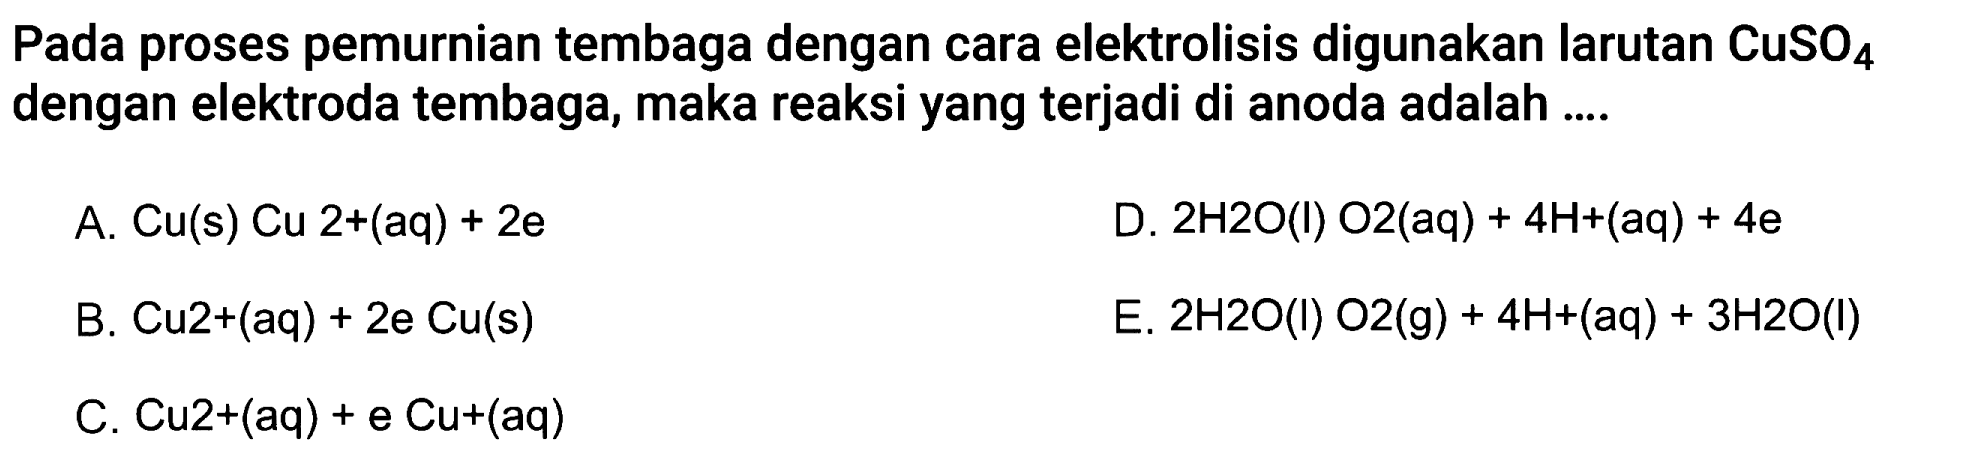 Pada proses pemurnian tembaga dengan cara elektrolisis digunakan larutan CuSO4 dengan elektroda tembaga, maka reaksi yang terjadi di anoda adalah ....
A. Cu(s) Cu 2+(aq)+2 e
D.  2 H 2 O(l) O 2(aq)+4 H+(aq)+4 e
B. Cu 2+(aq)+2 e Cu(s) 
E.  2 H 2 O(I) O 2(g)+4 H+(aq)+3 H 2 O(I) 
C. Cu 2+(aq)+e Cu+(aq) 